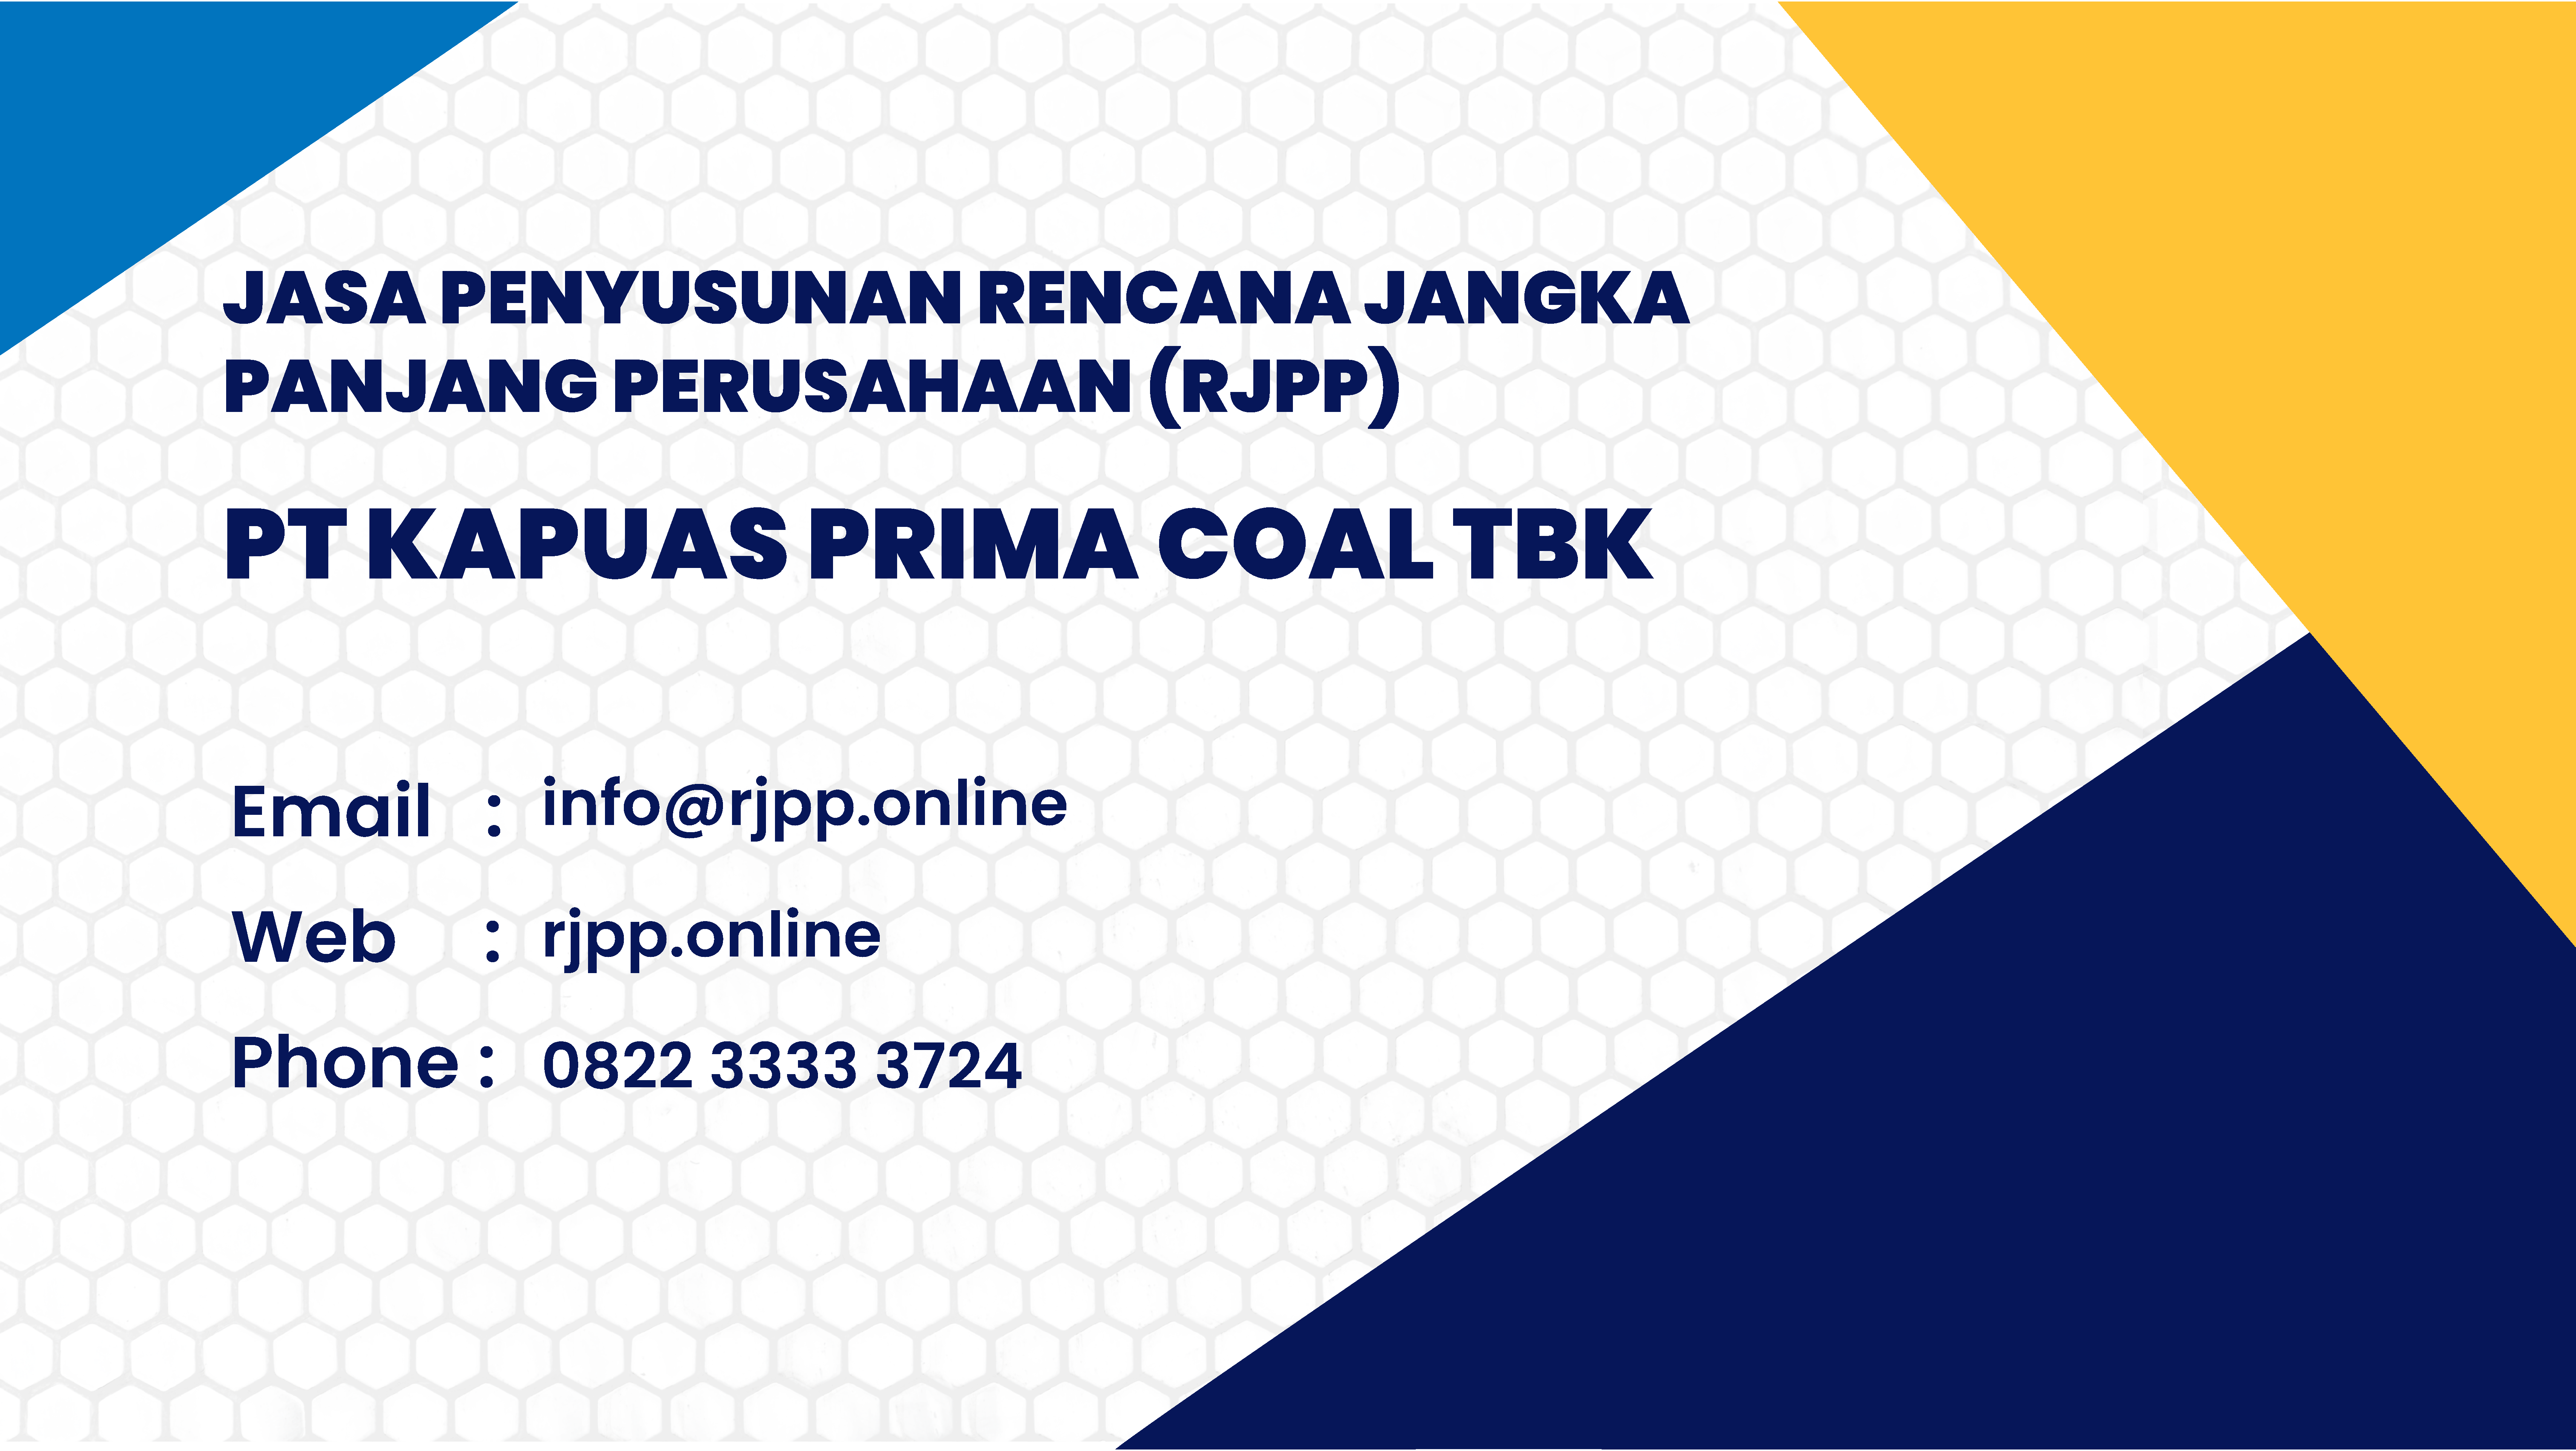 RJPP PT Kapuas Prima Coal